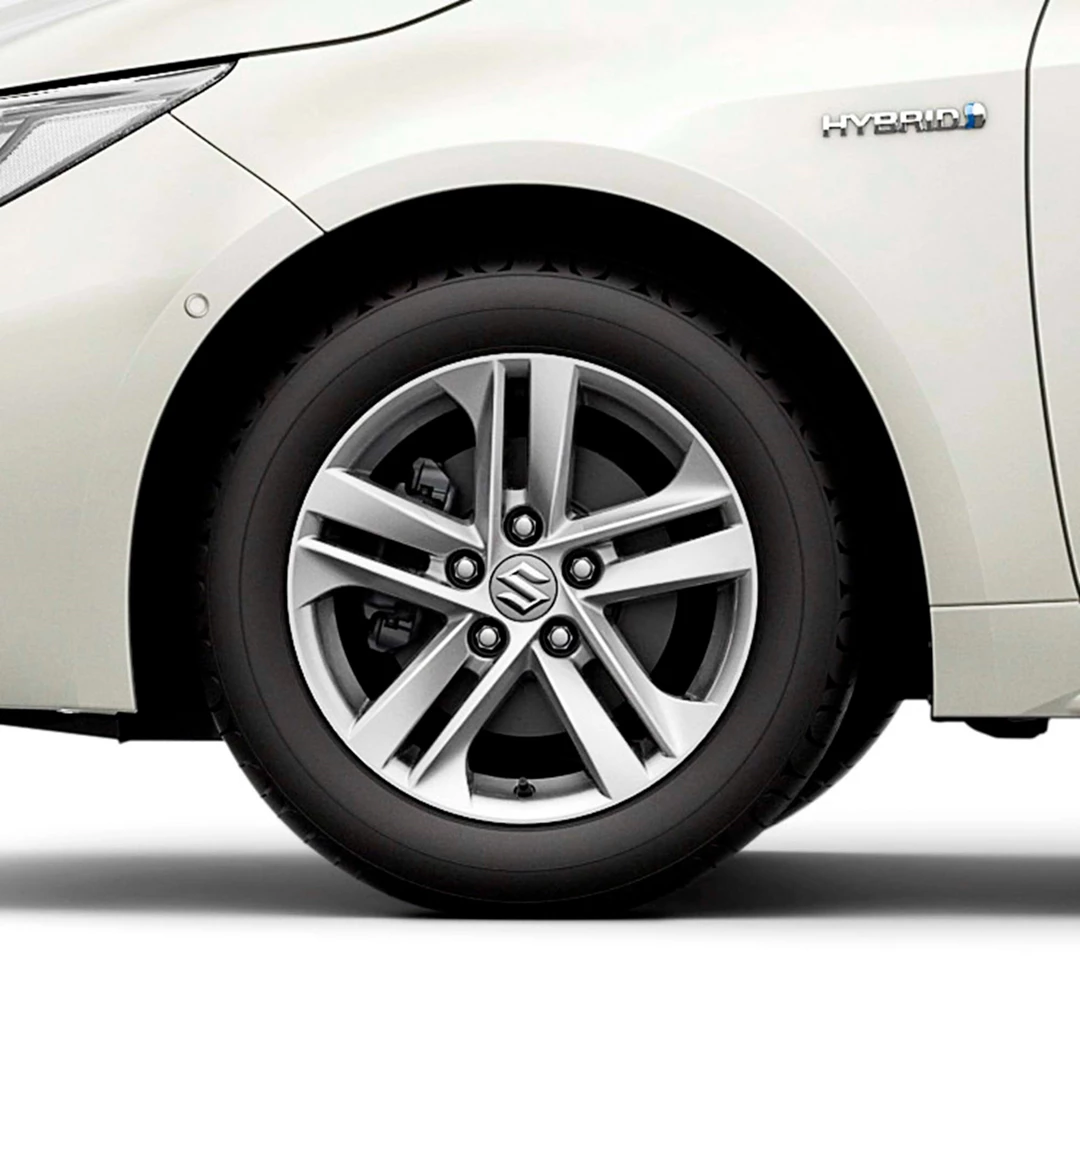 16-inch polished alloy wheels